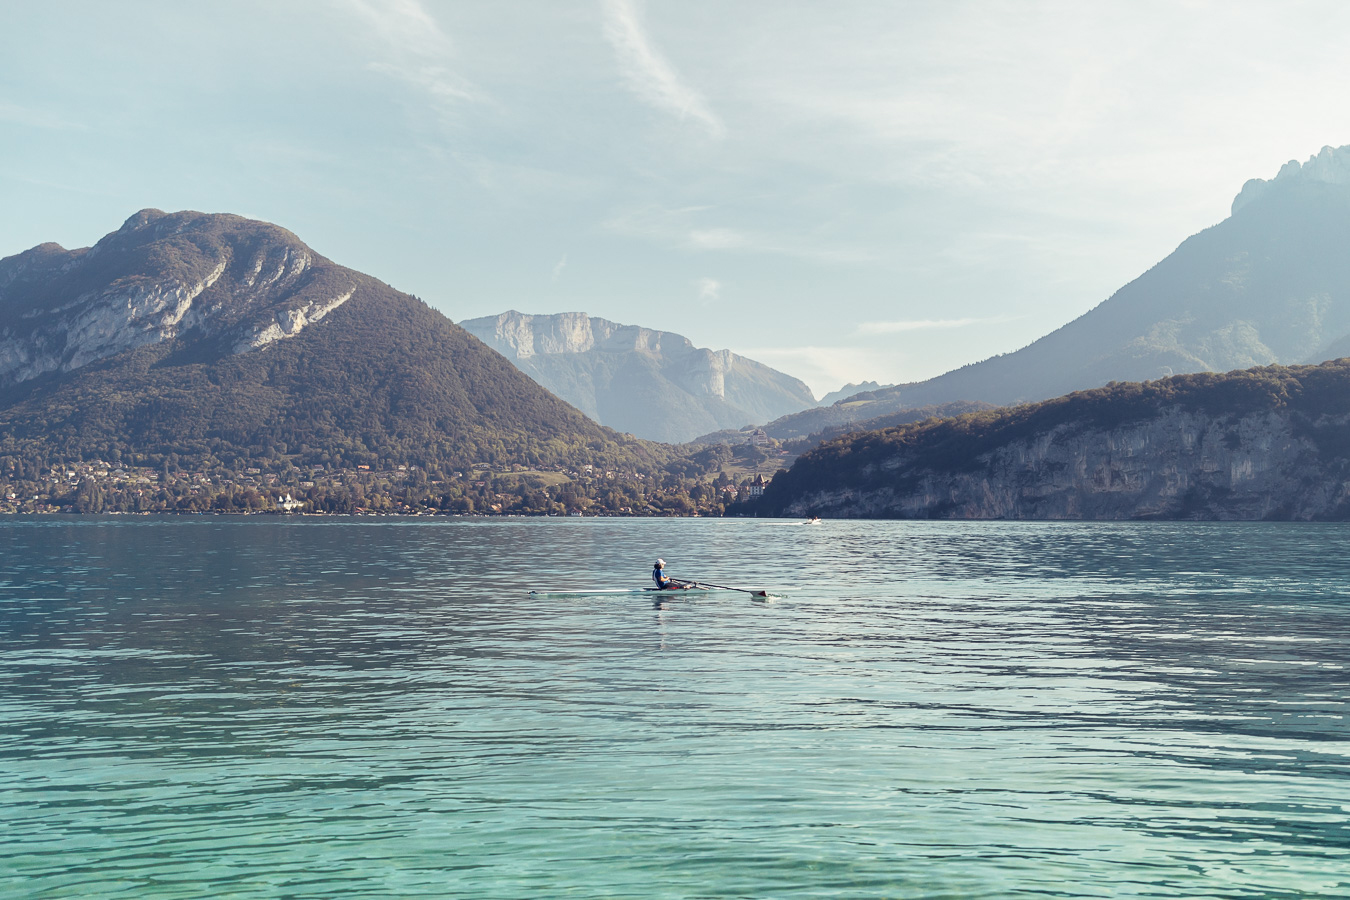 Photograph of Lake Brienz, Switzerland